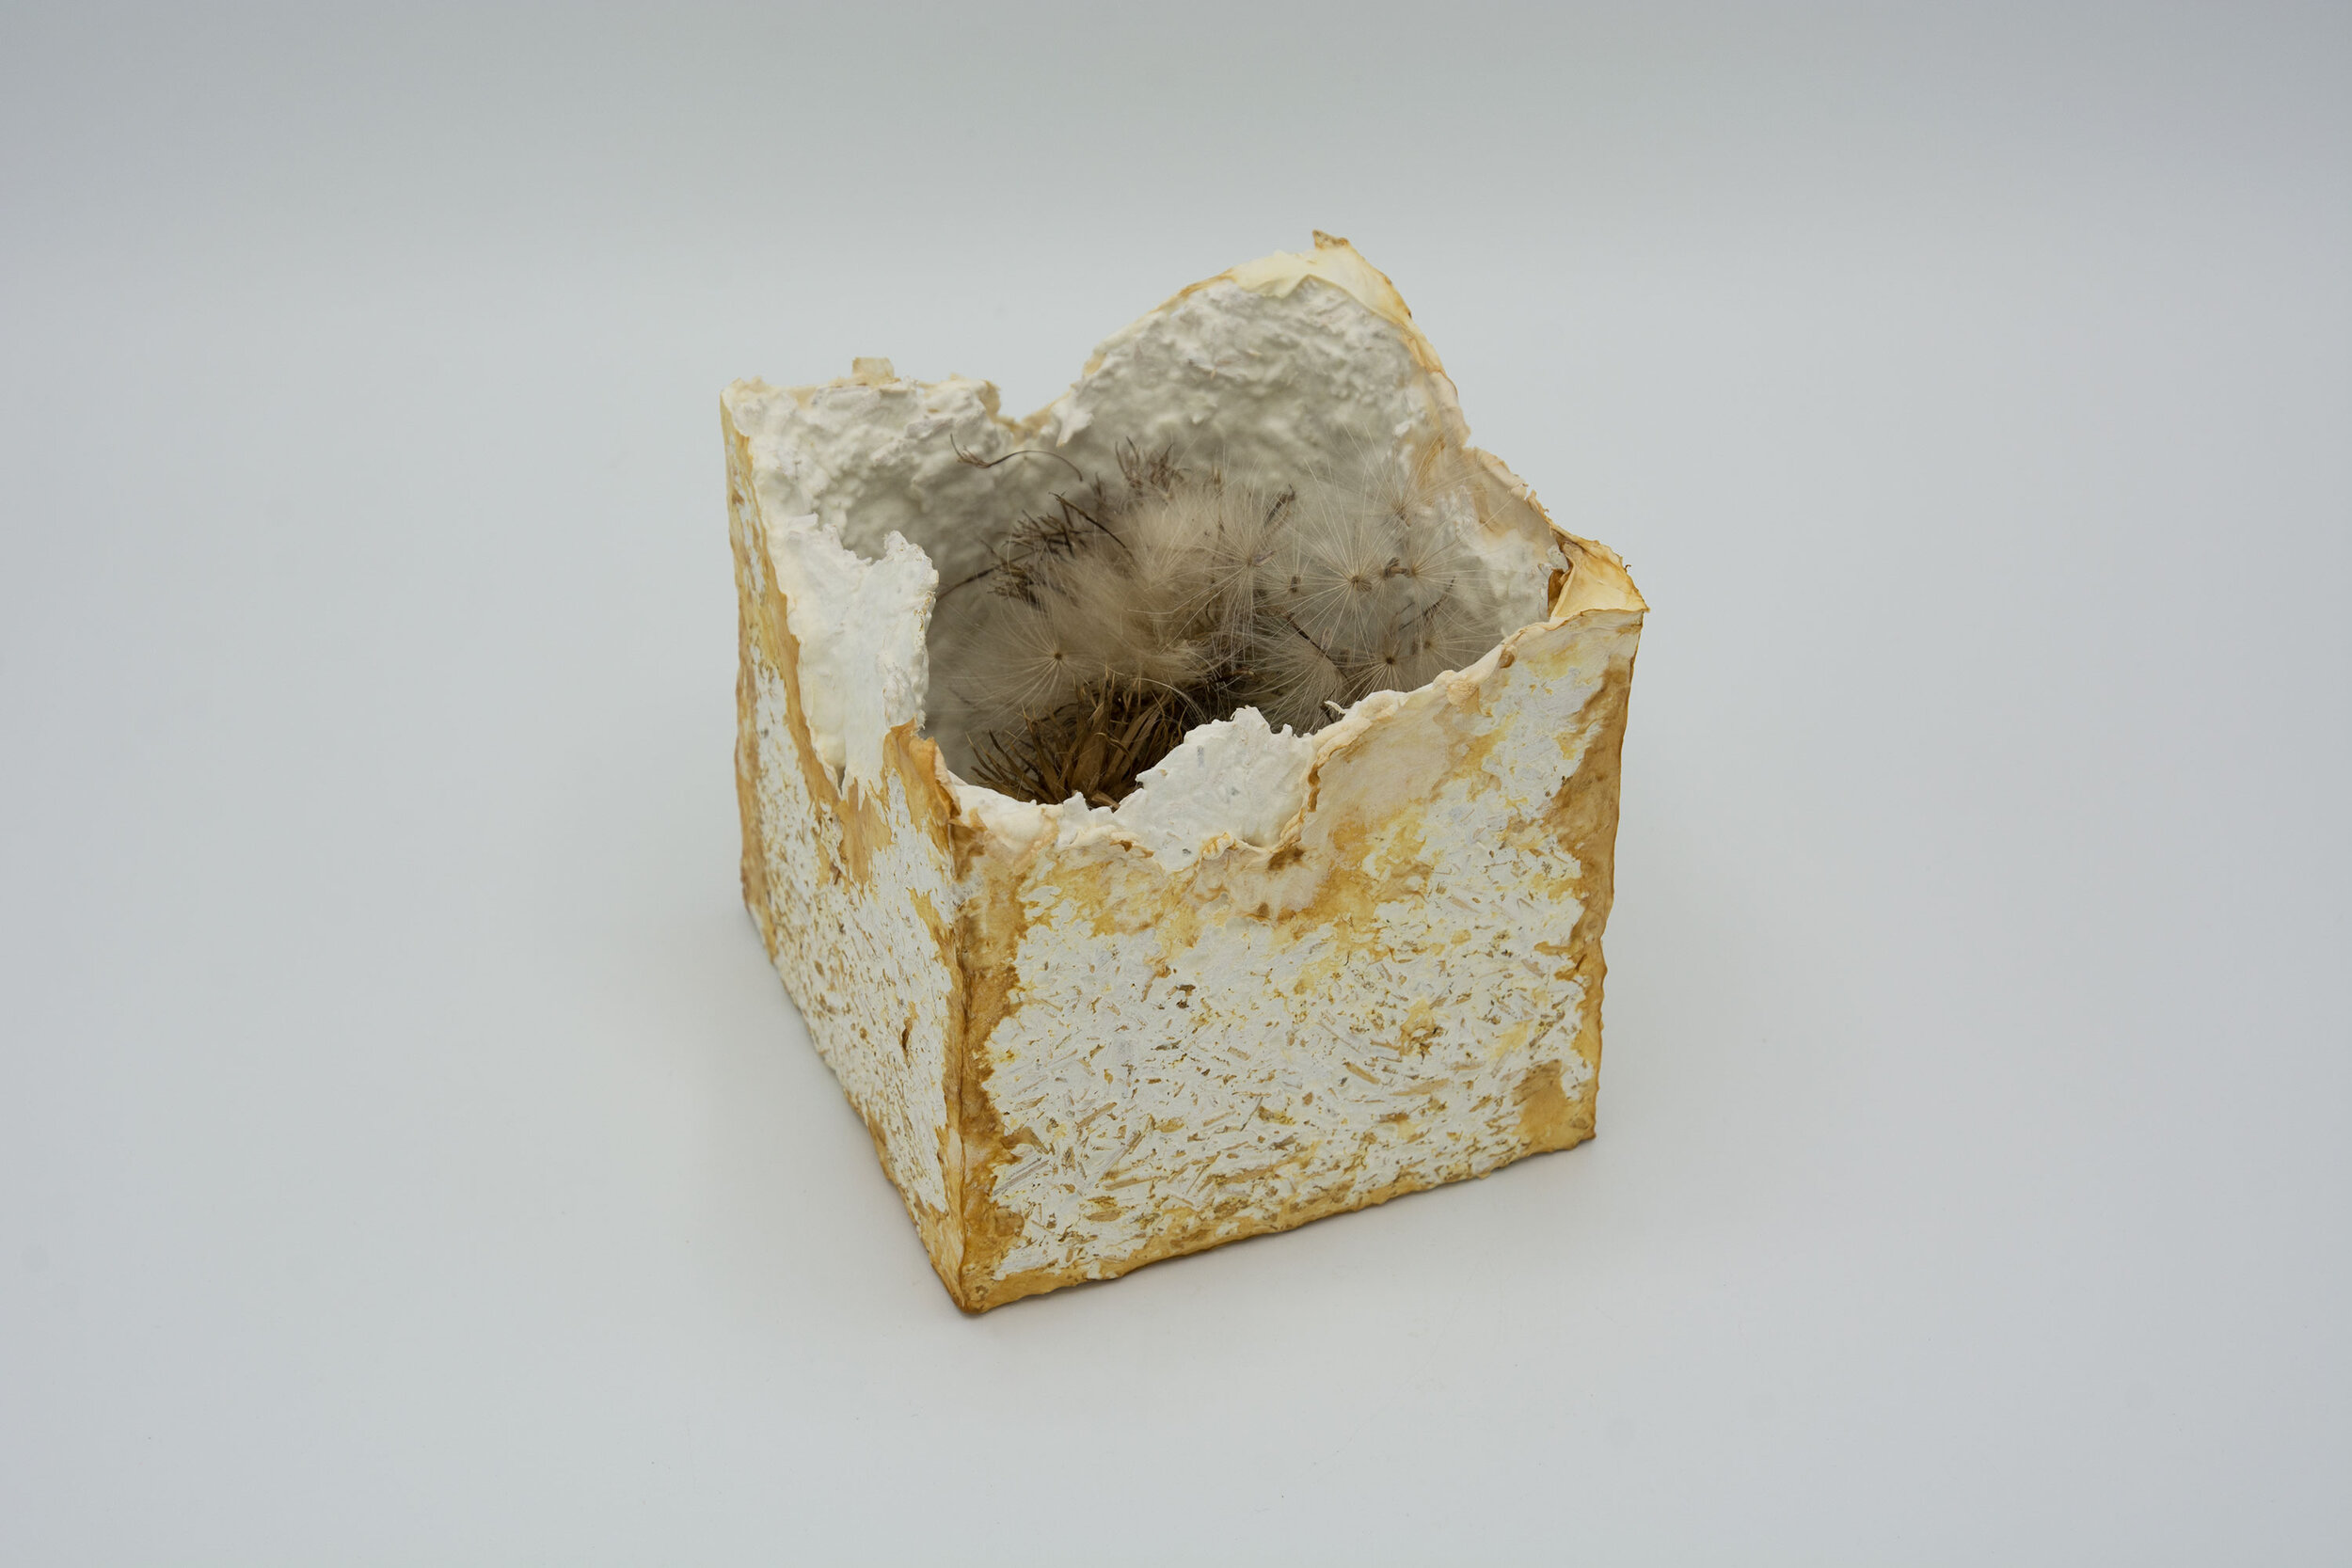  Kelly M O'Brien, One Meter Quadrat, detail, large cube. Mycelium, thistle seed heads ©2021 